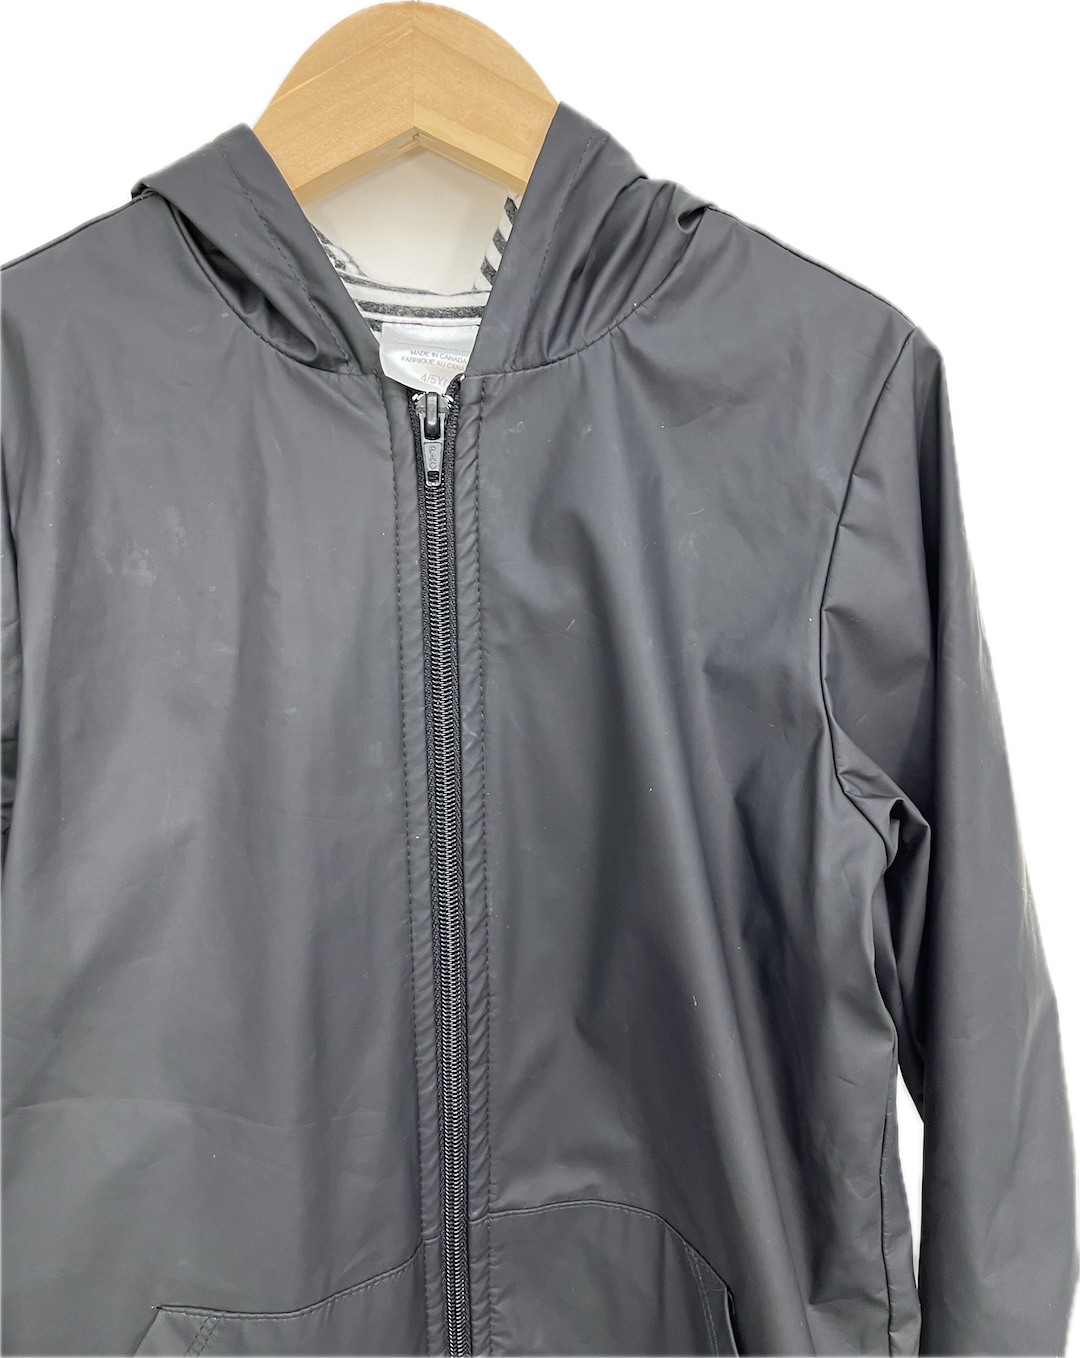 jax + lennon black rain jacket 4T (marks on fabric)